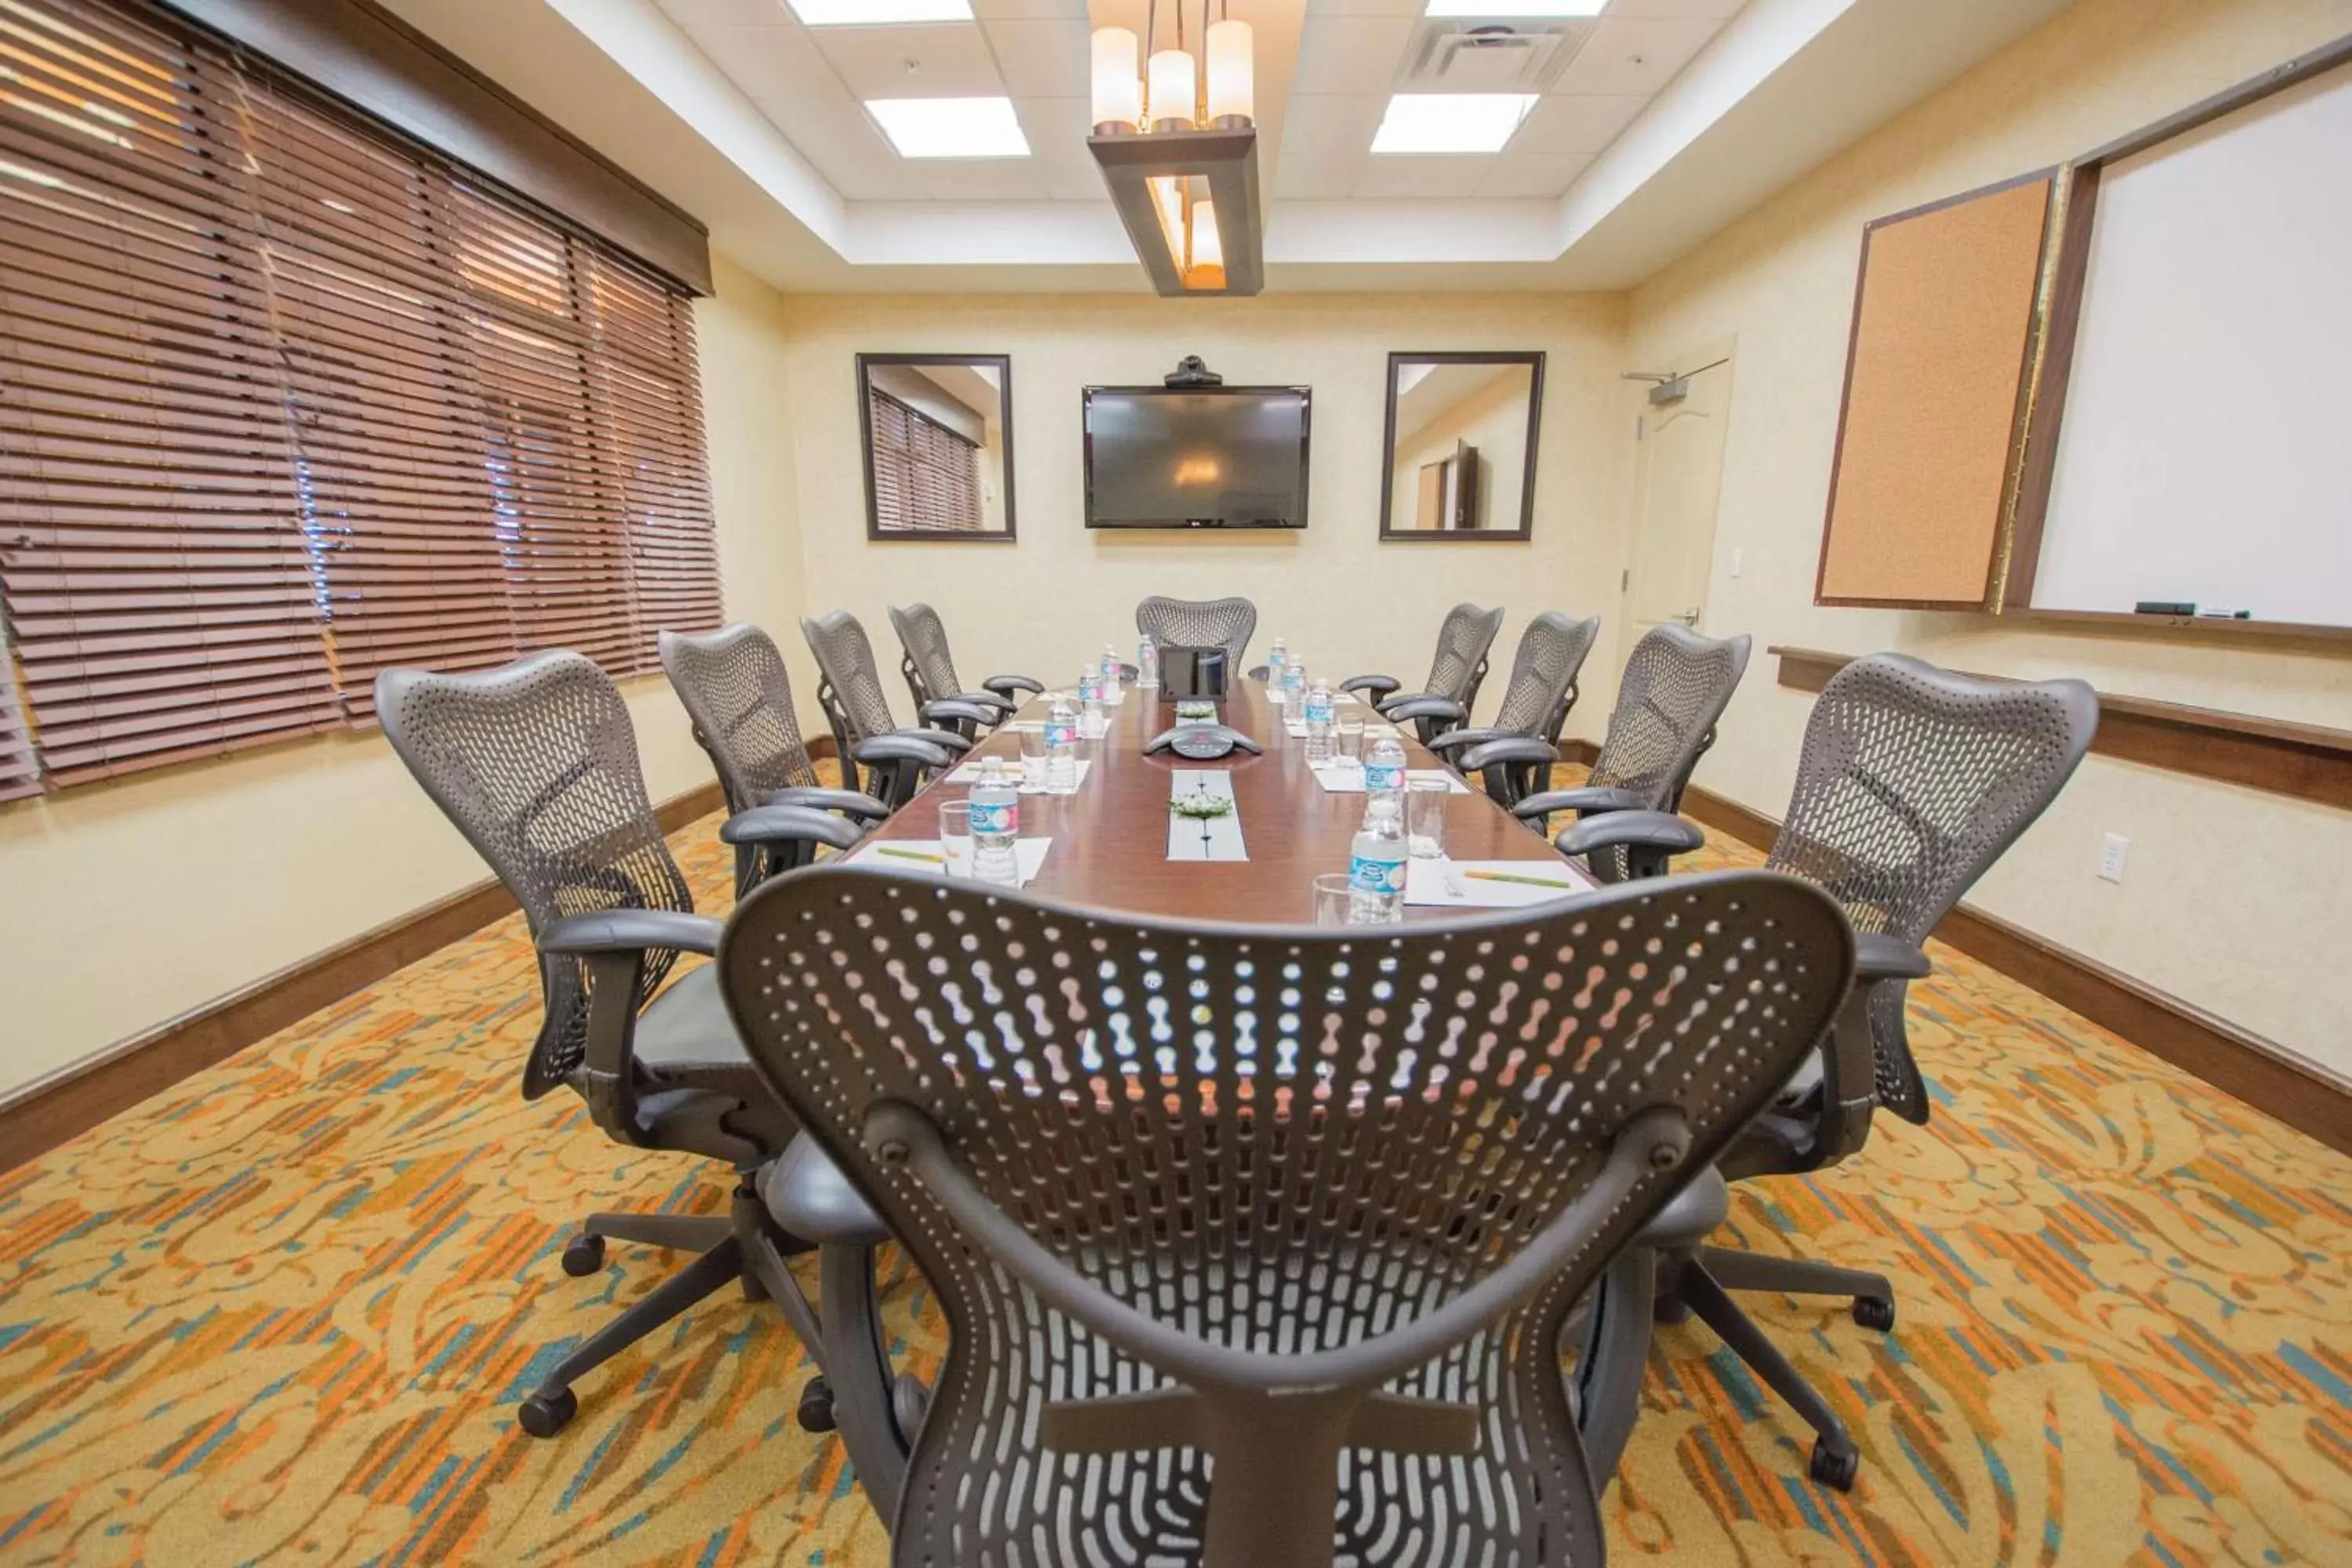 Meeting/conference room in Hilton Garden Inn Watertown